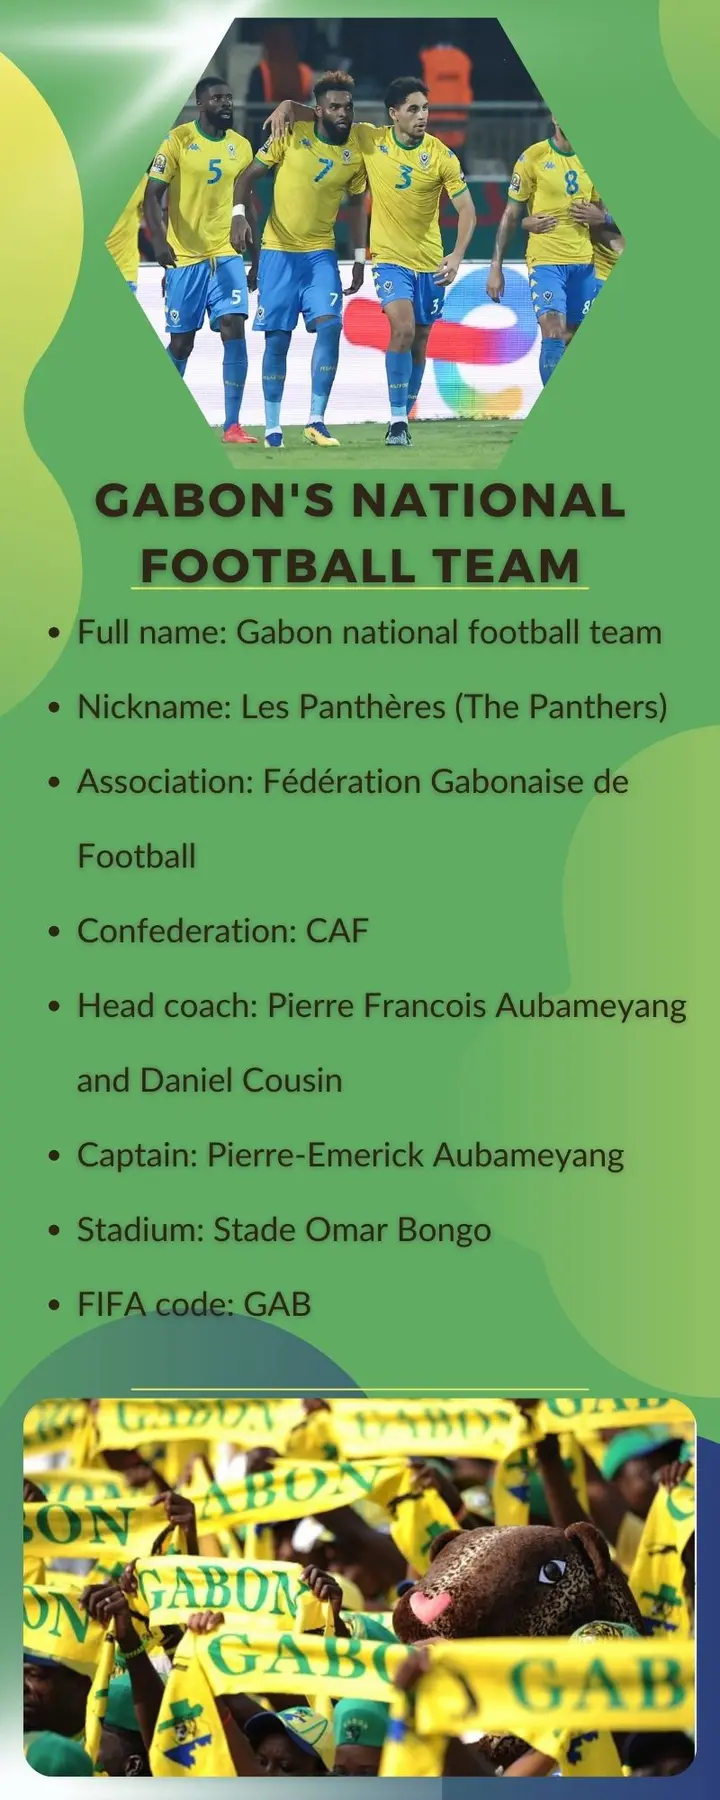 Gabon's national football team